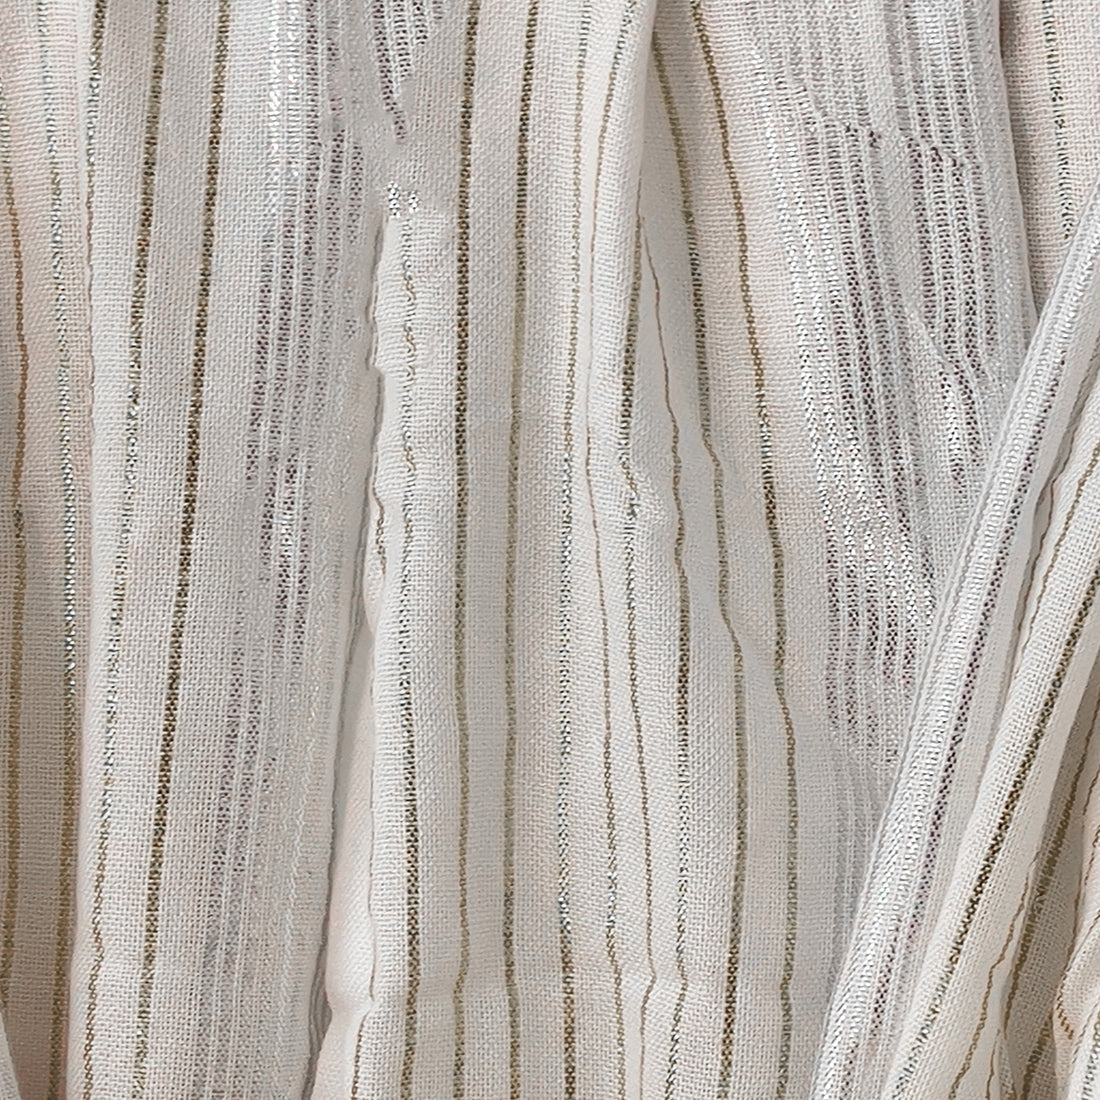 Contemporary Silver & Gold Lurex Striped White Tassel Scarf